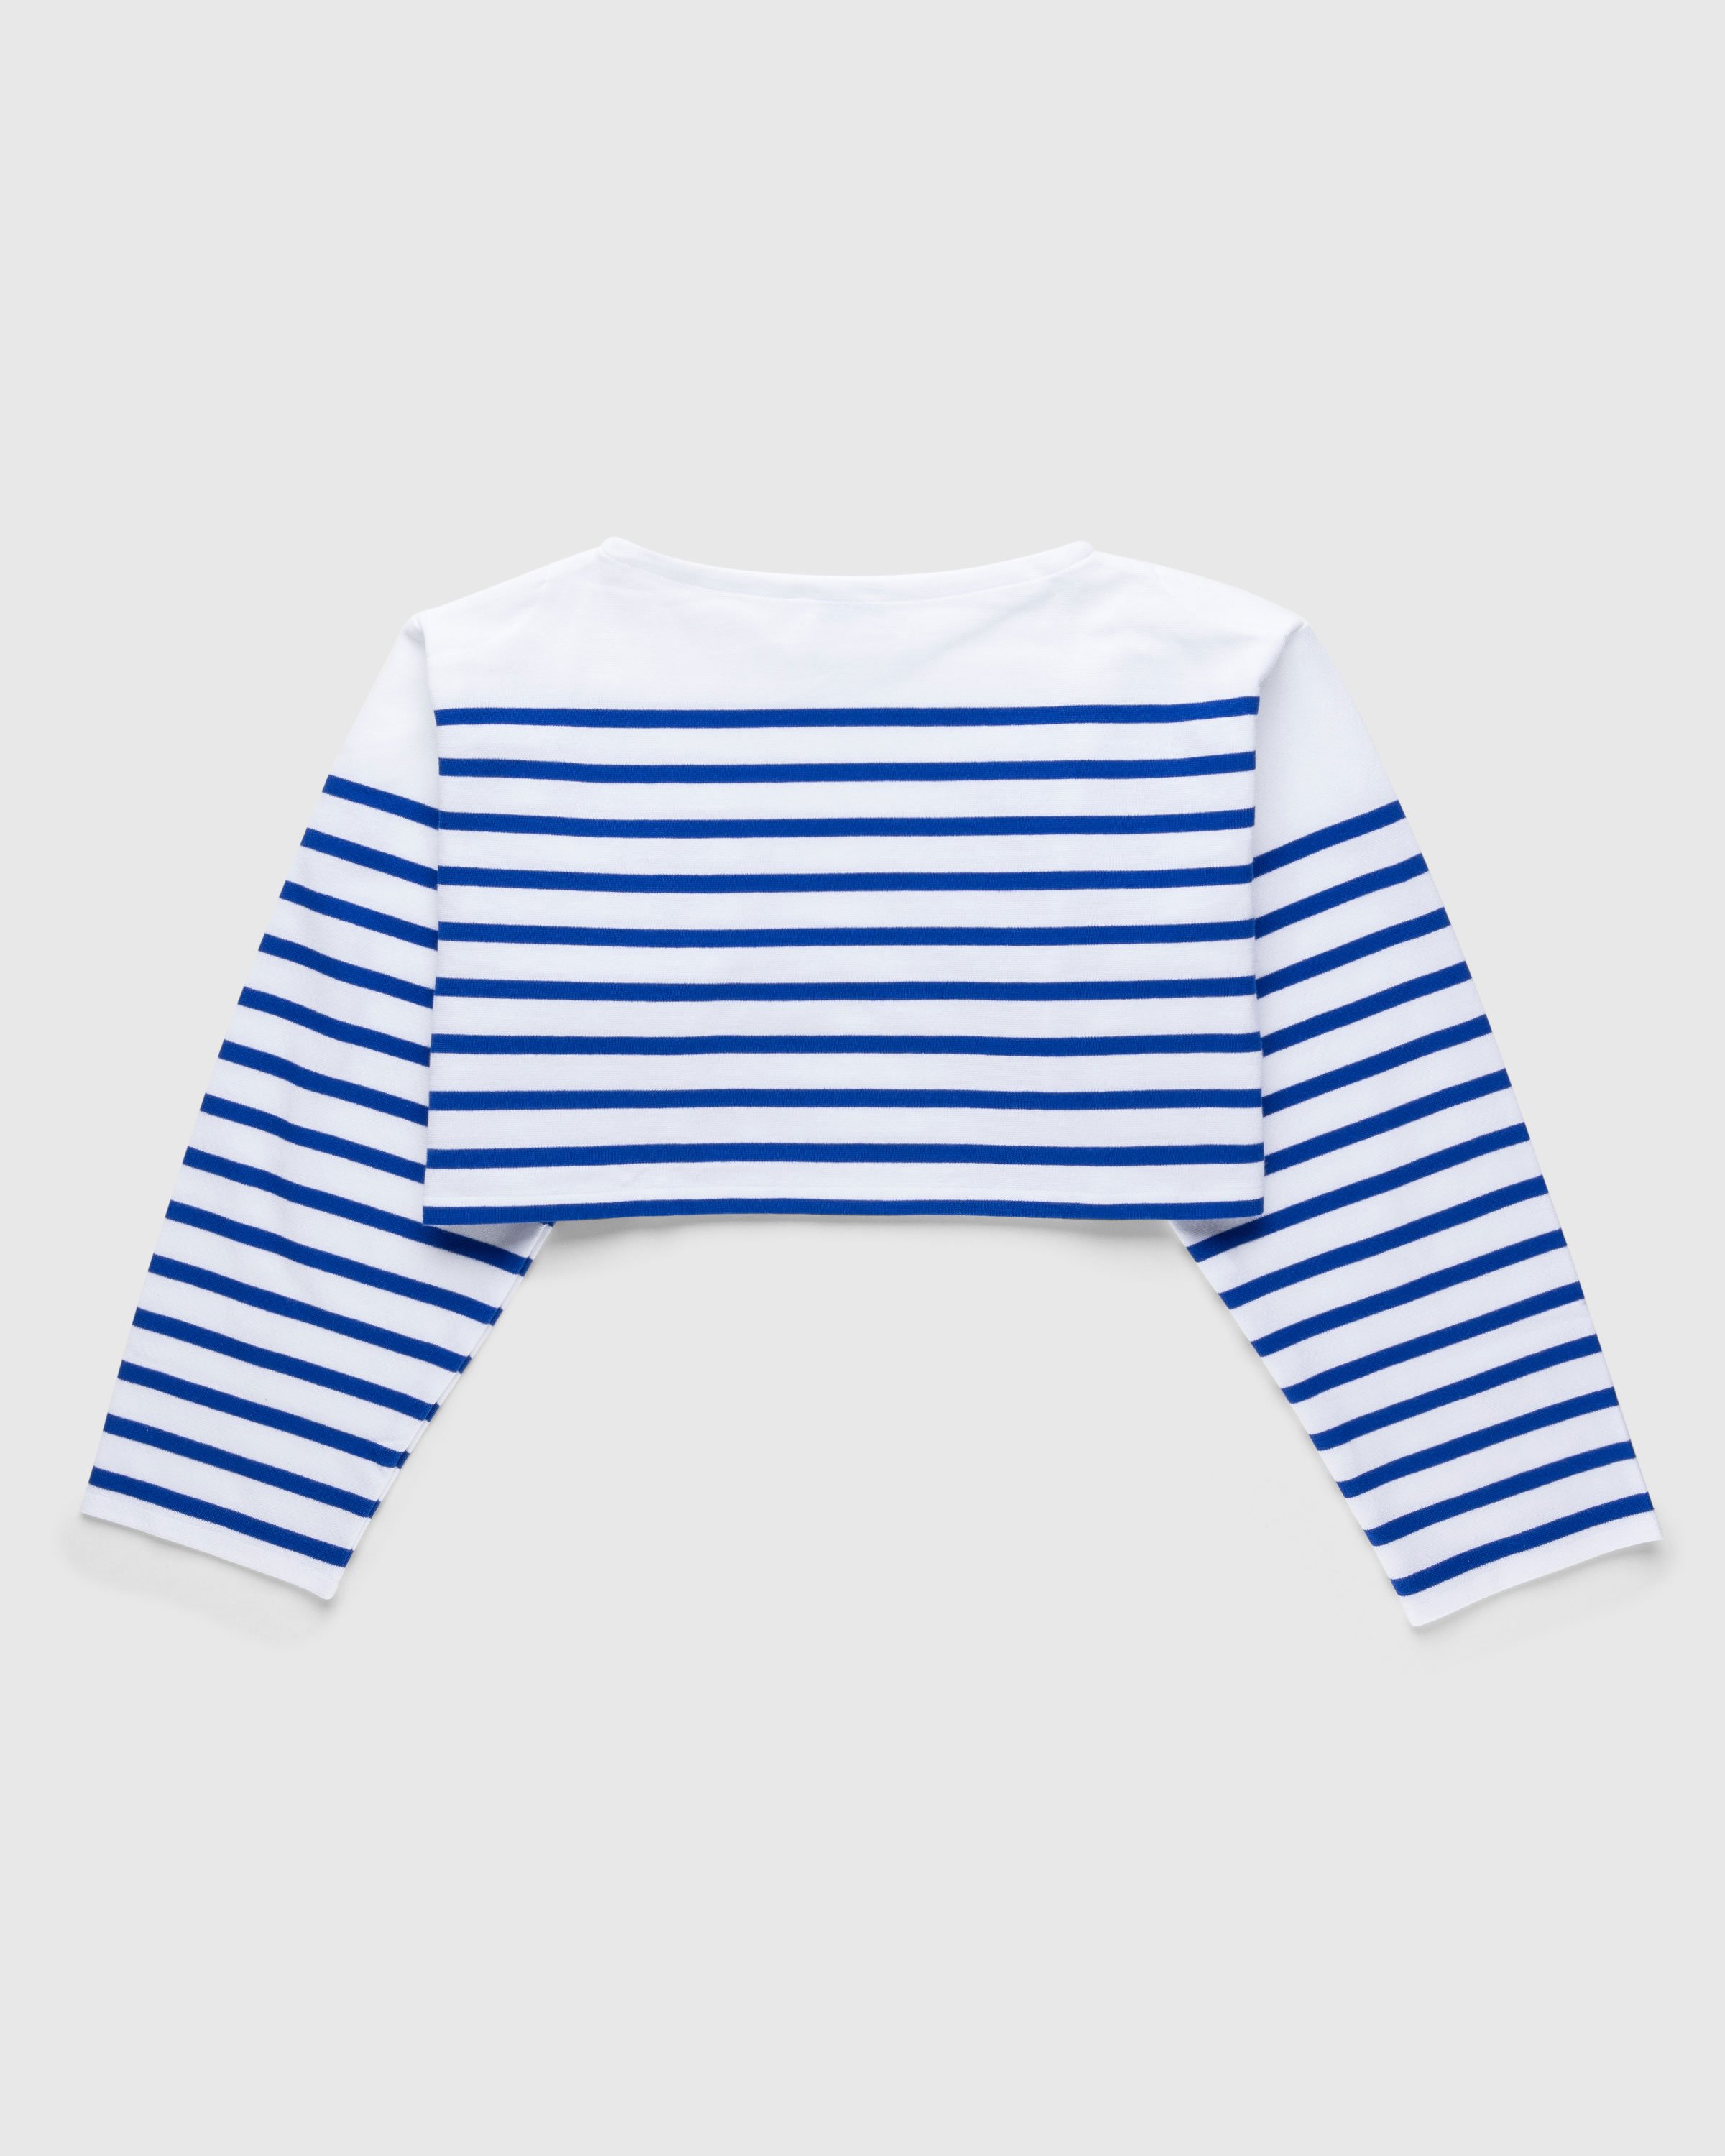 Jean Paul Gaultier x Highsnobiety - La Marinière Crop Top - Clothing - Blue - Image 1